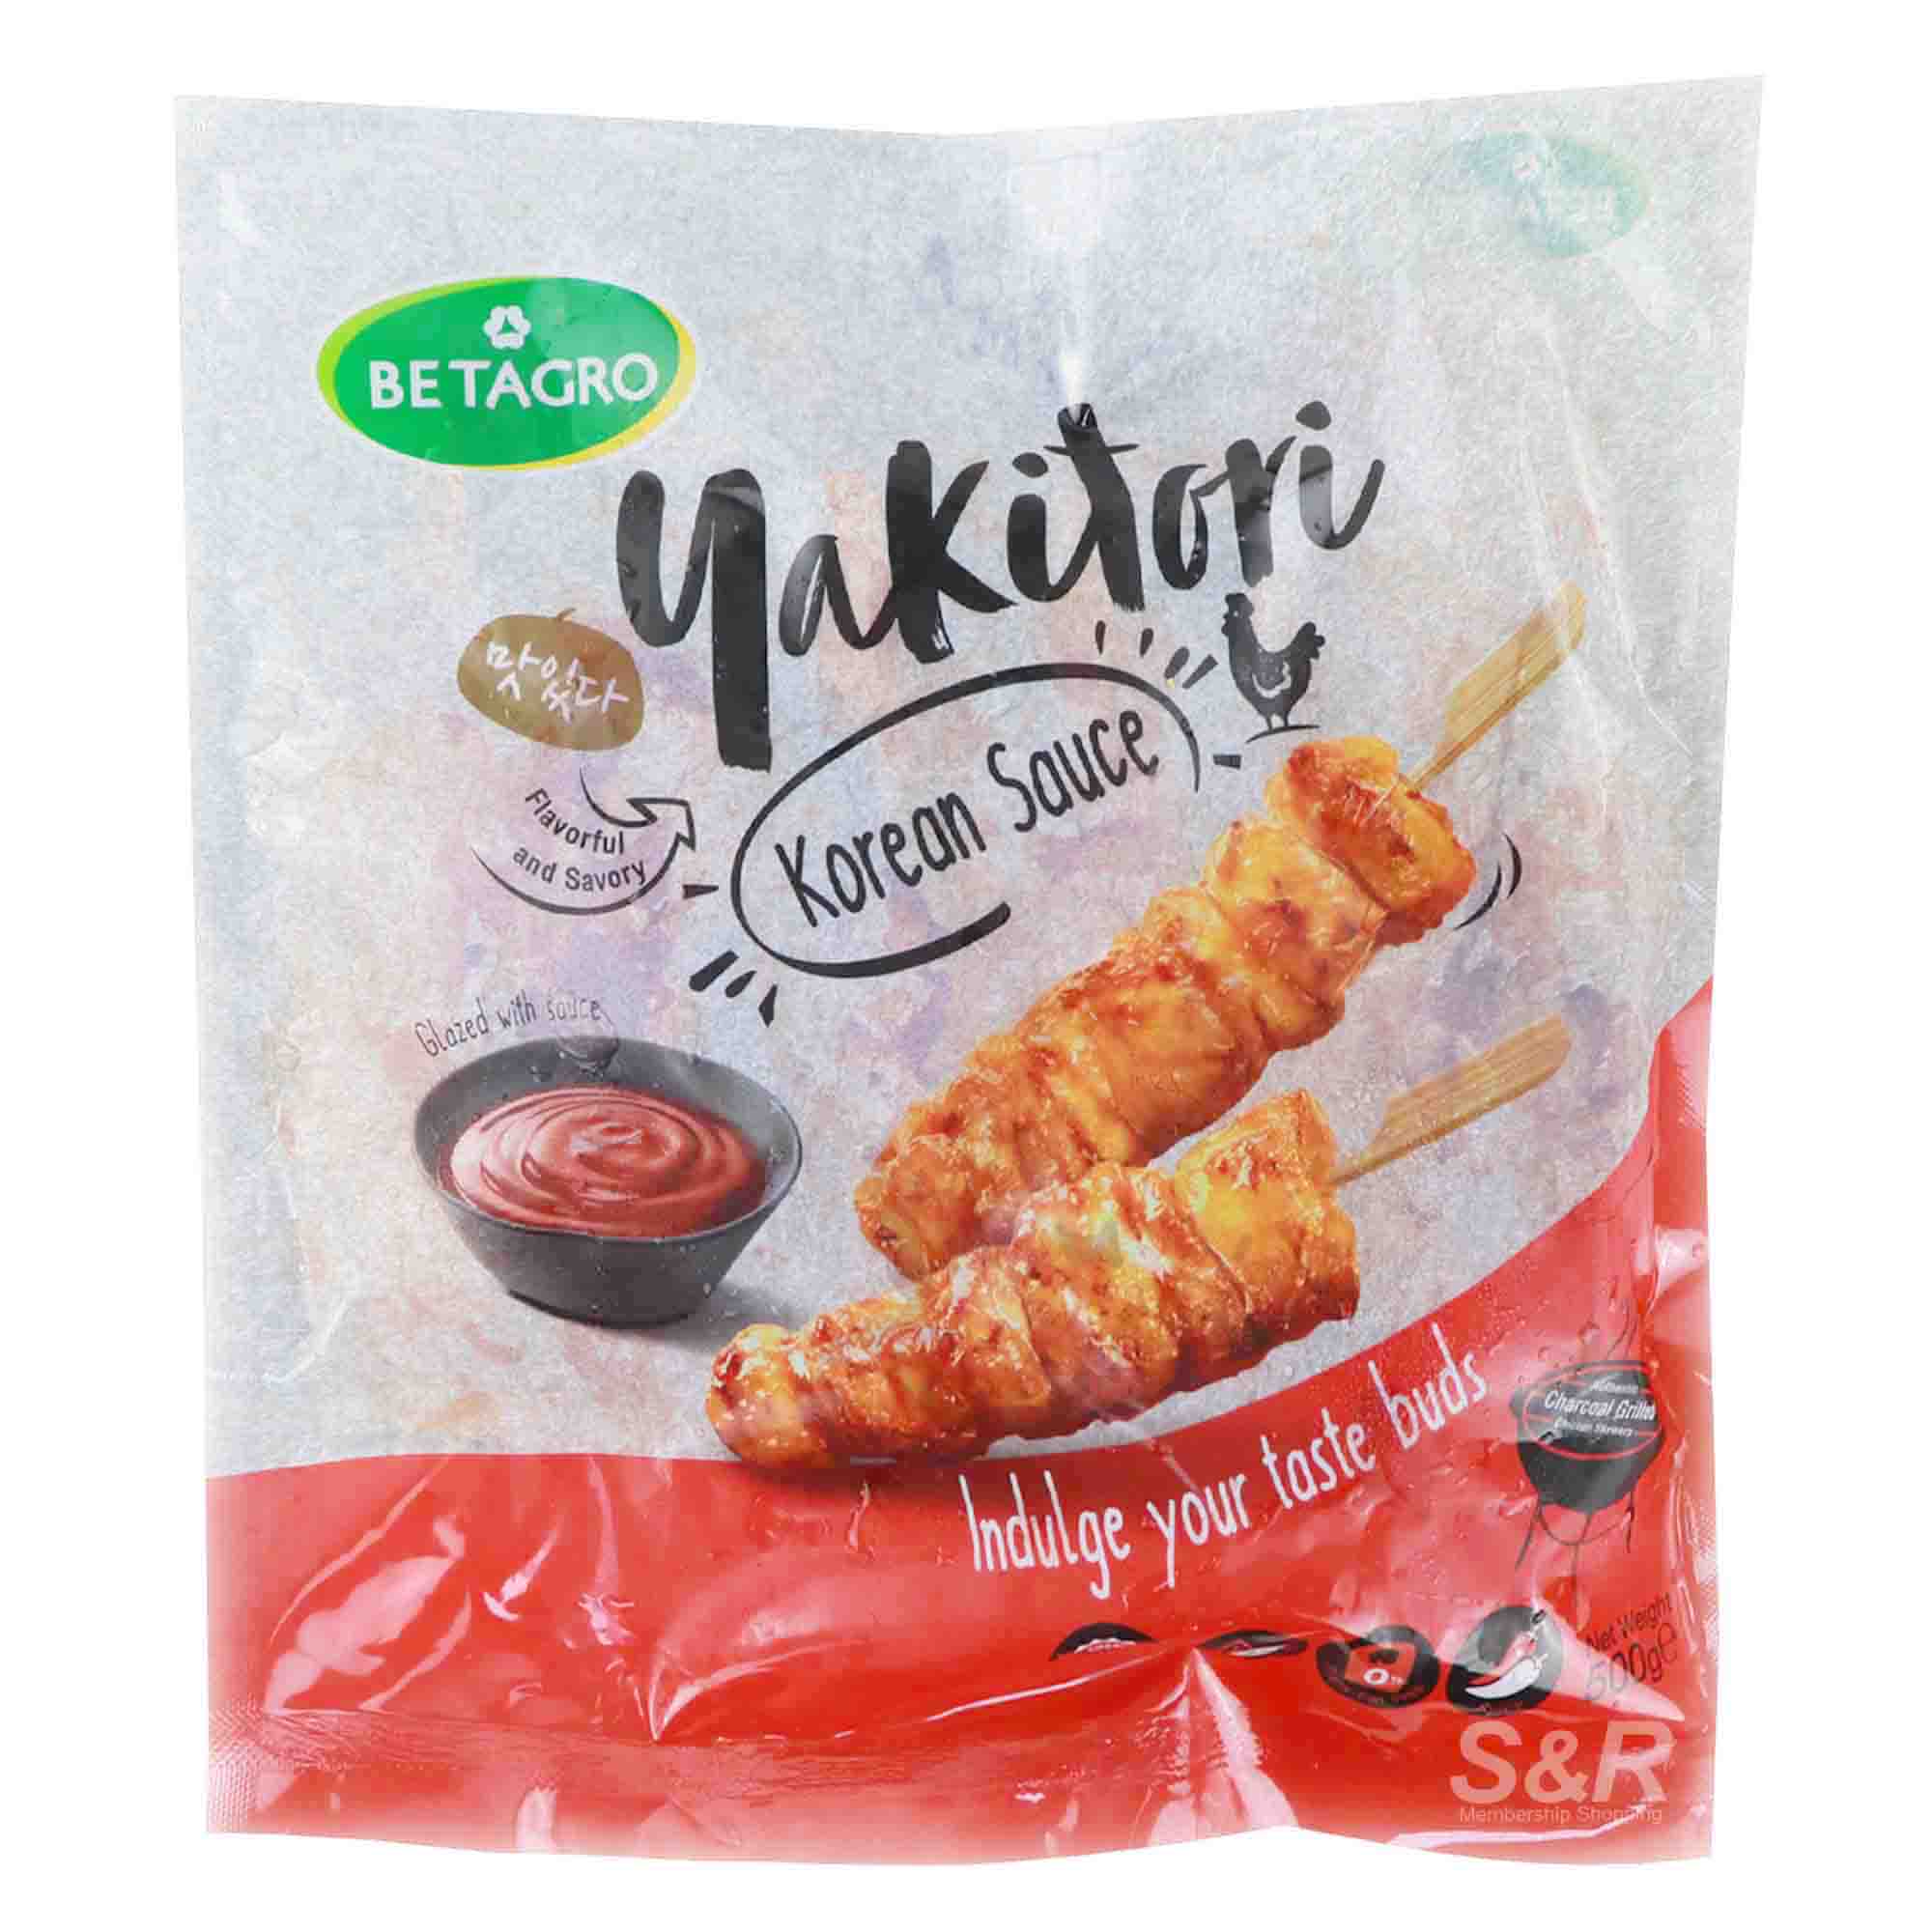 Betagro Yakitori Chicken Korean Sauce 500g